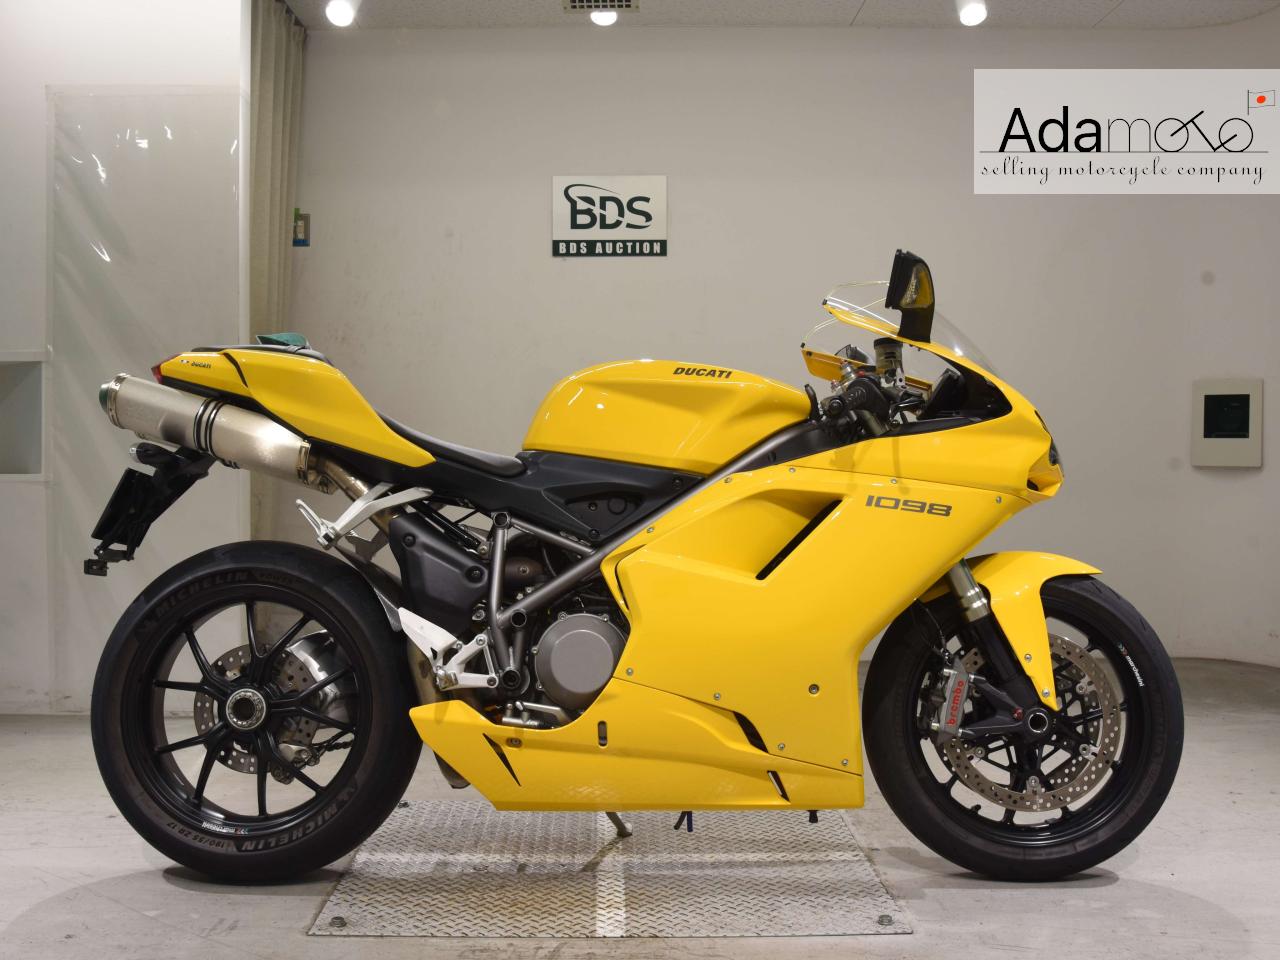 Ducati 1098 - Adamoto - Motorcycles from Japan